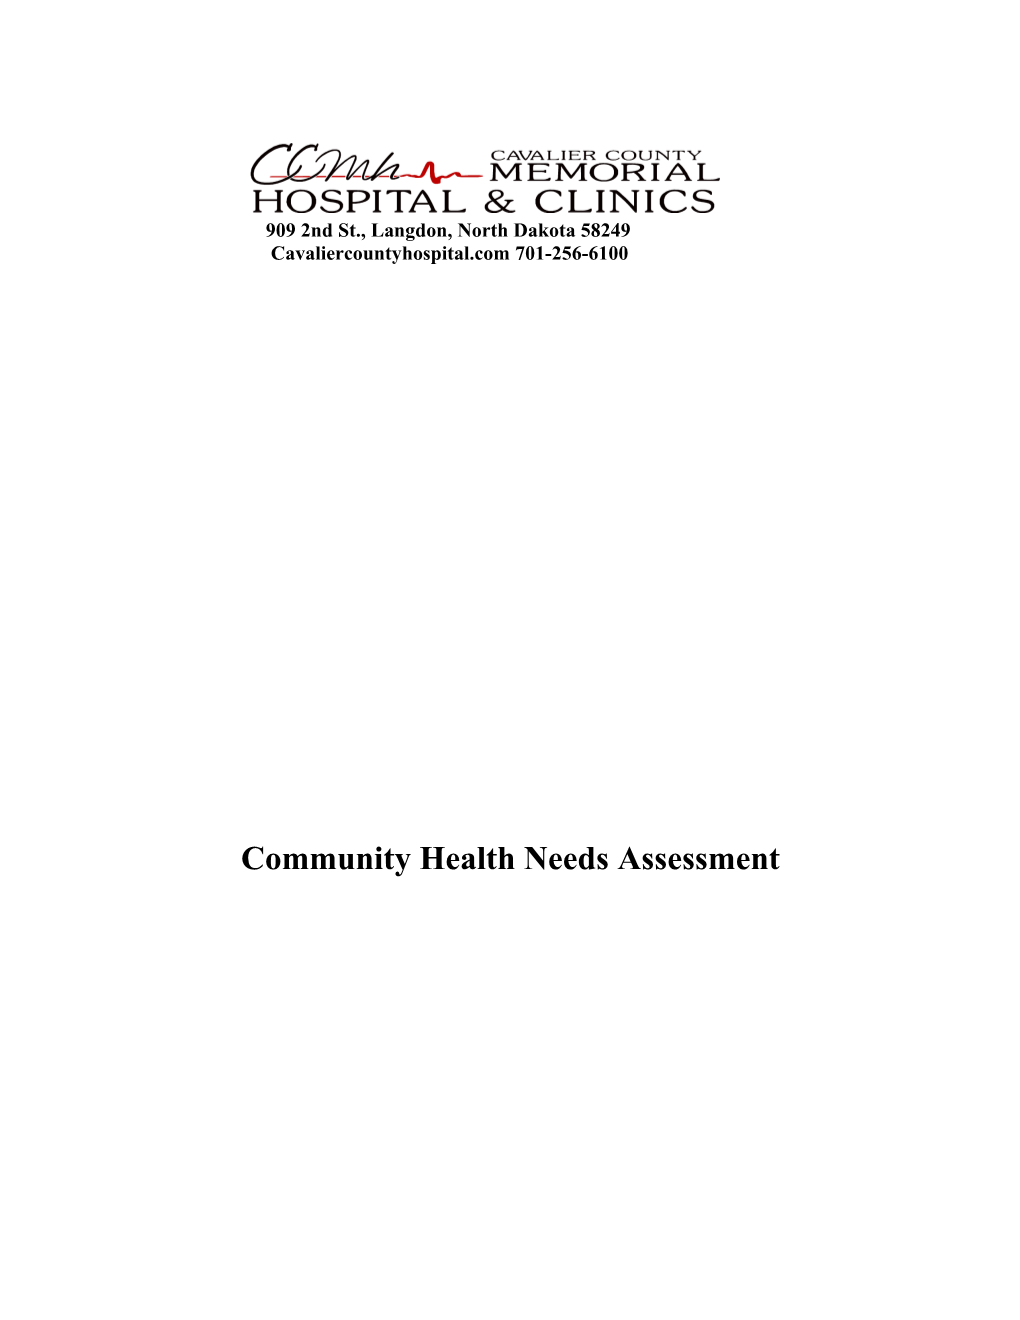 Cavalier County Memorial Hospital: Community Health Assessment